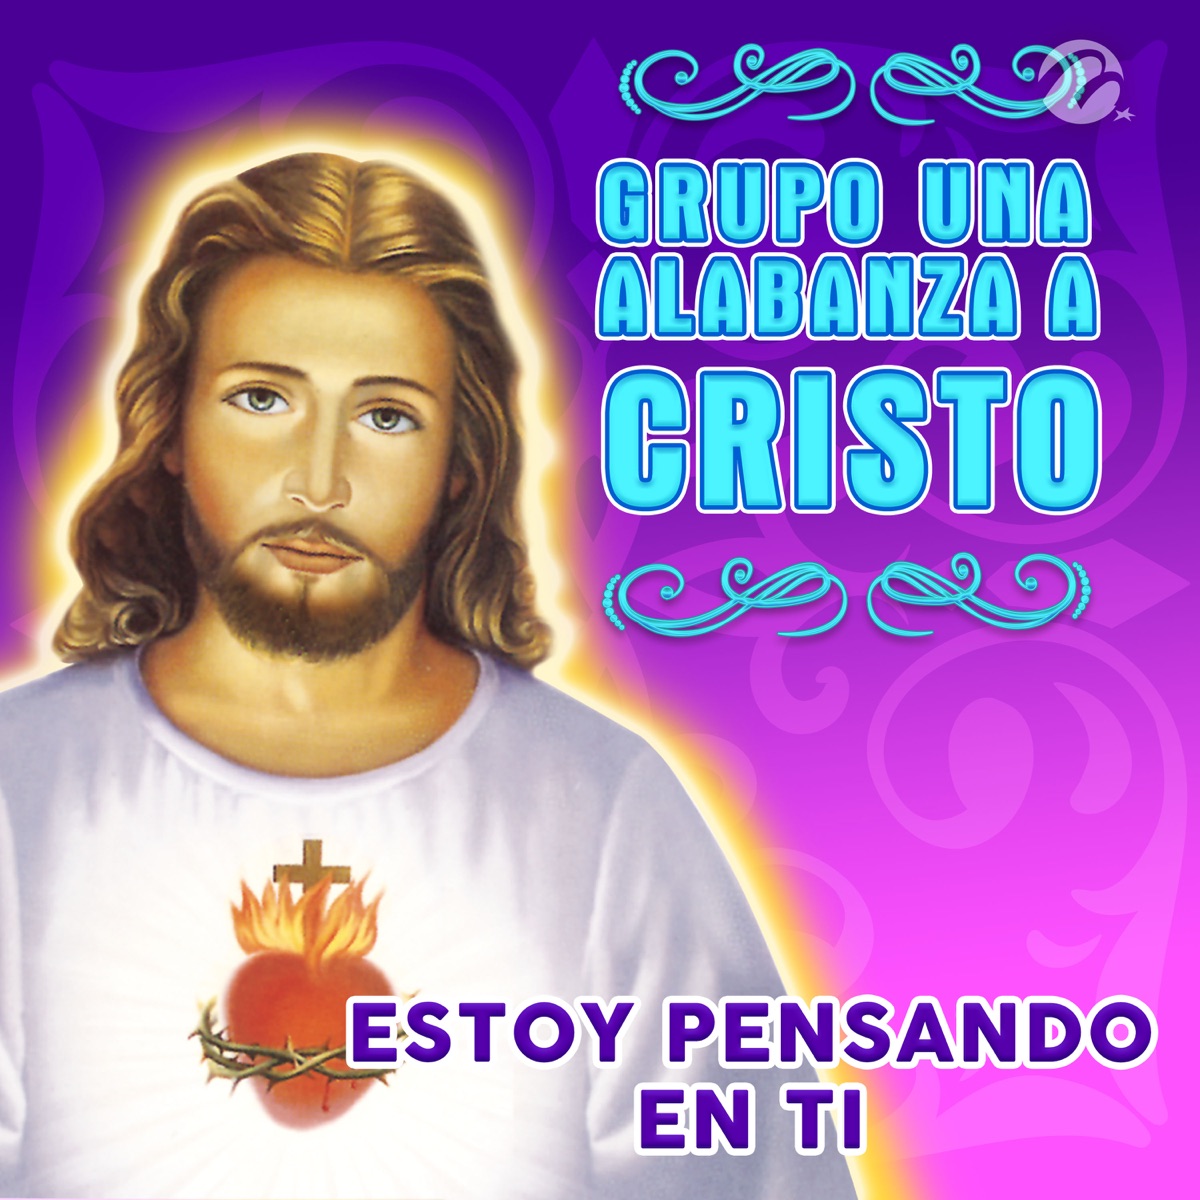 Sáname Señor - Single by Grupo una Alabanza a Cristo on Apple Music